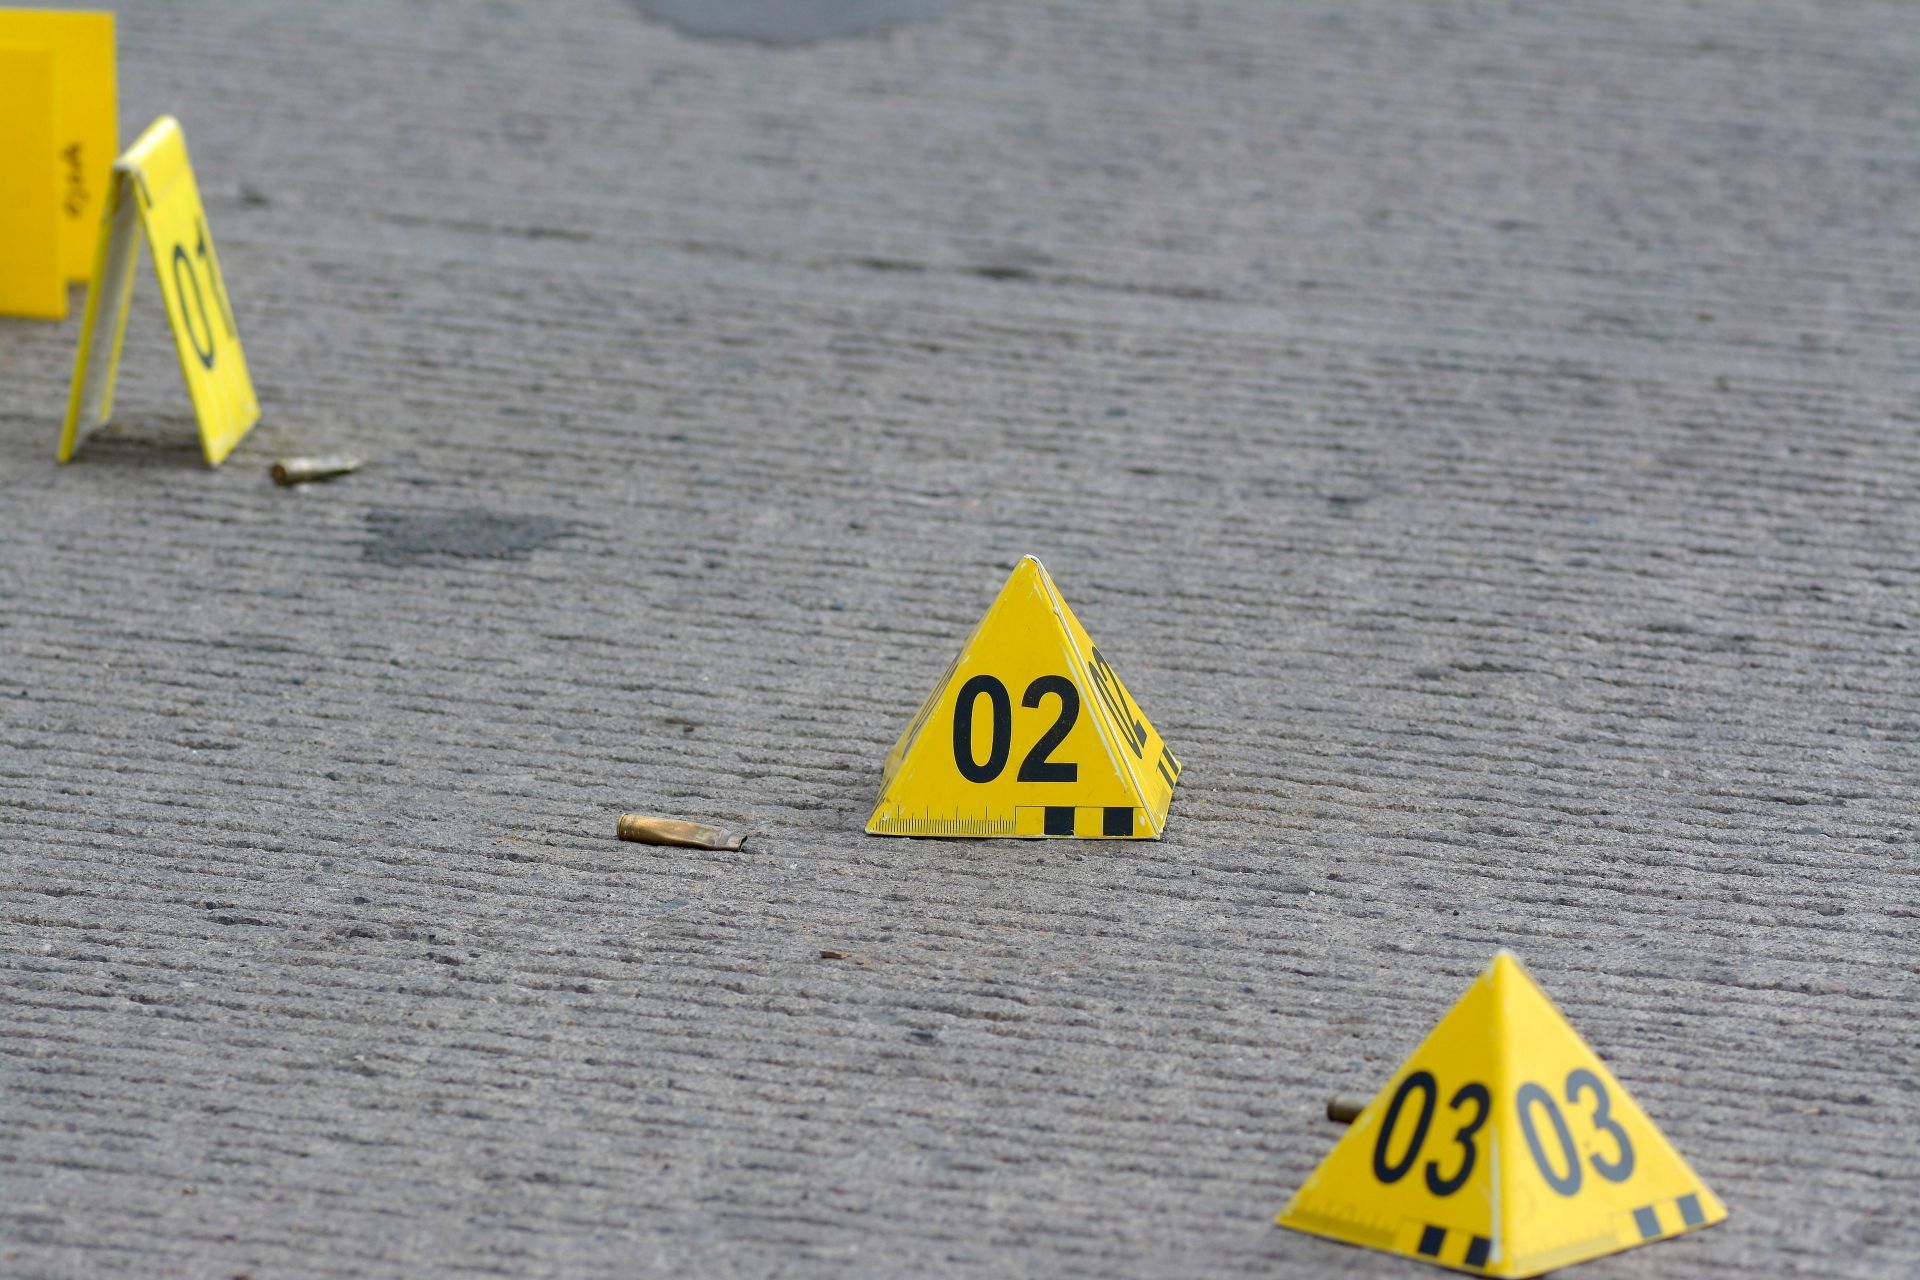 Asesinan a 9 personas en Atlixco, Puebla